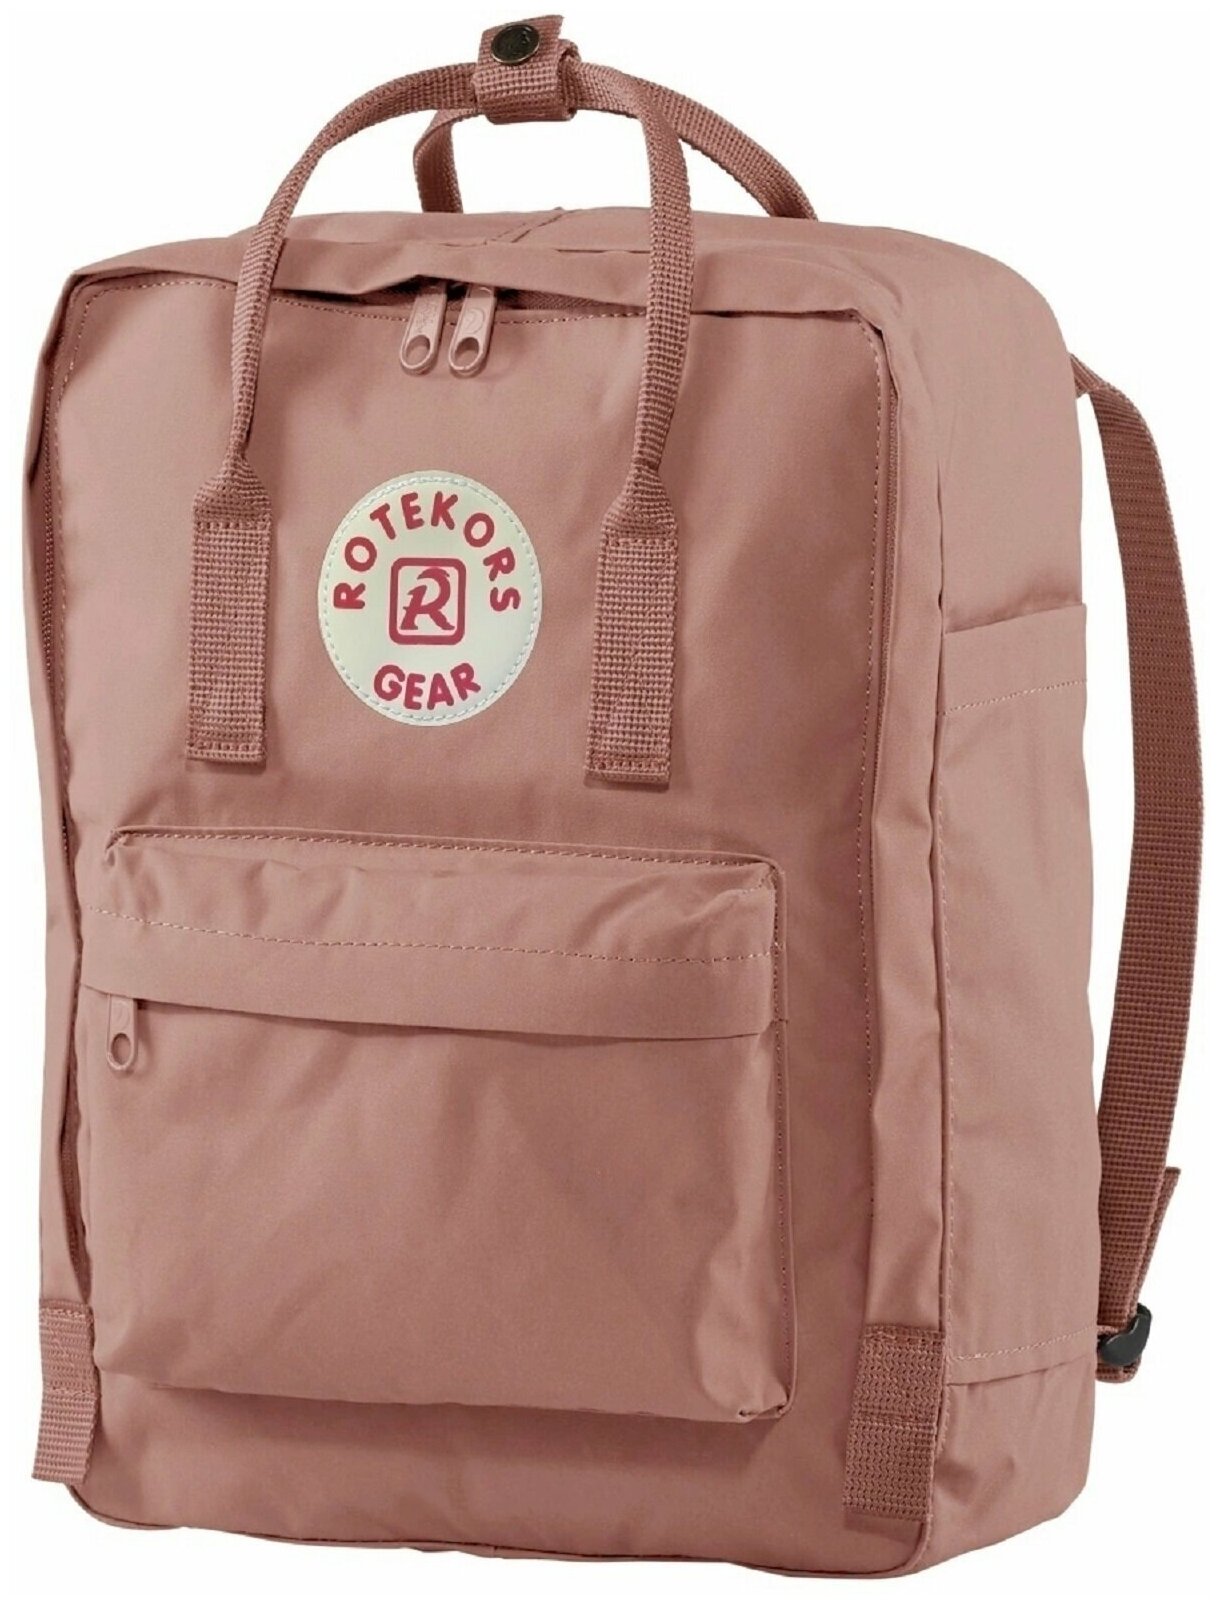 Рюкзак женский мужской унисекс - сумка для школы Rittlekors Gear Розовый